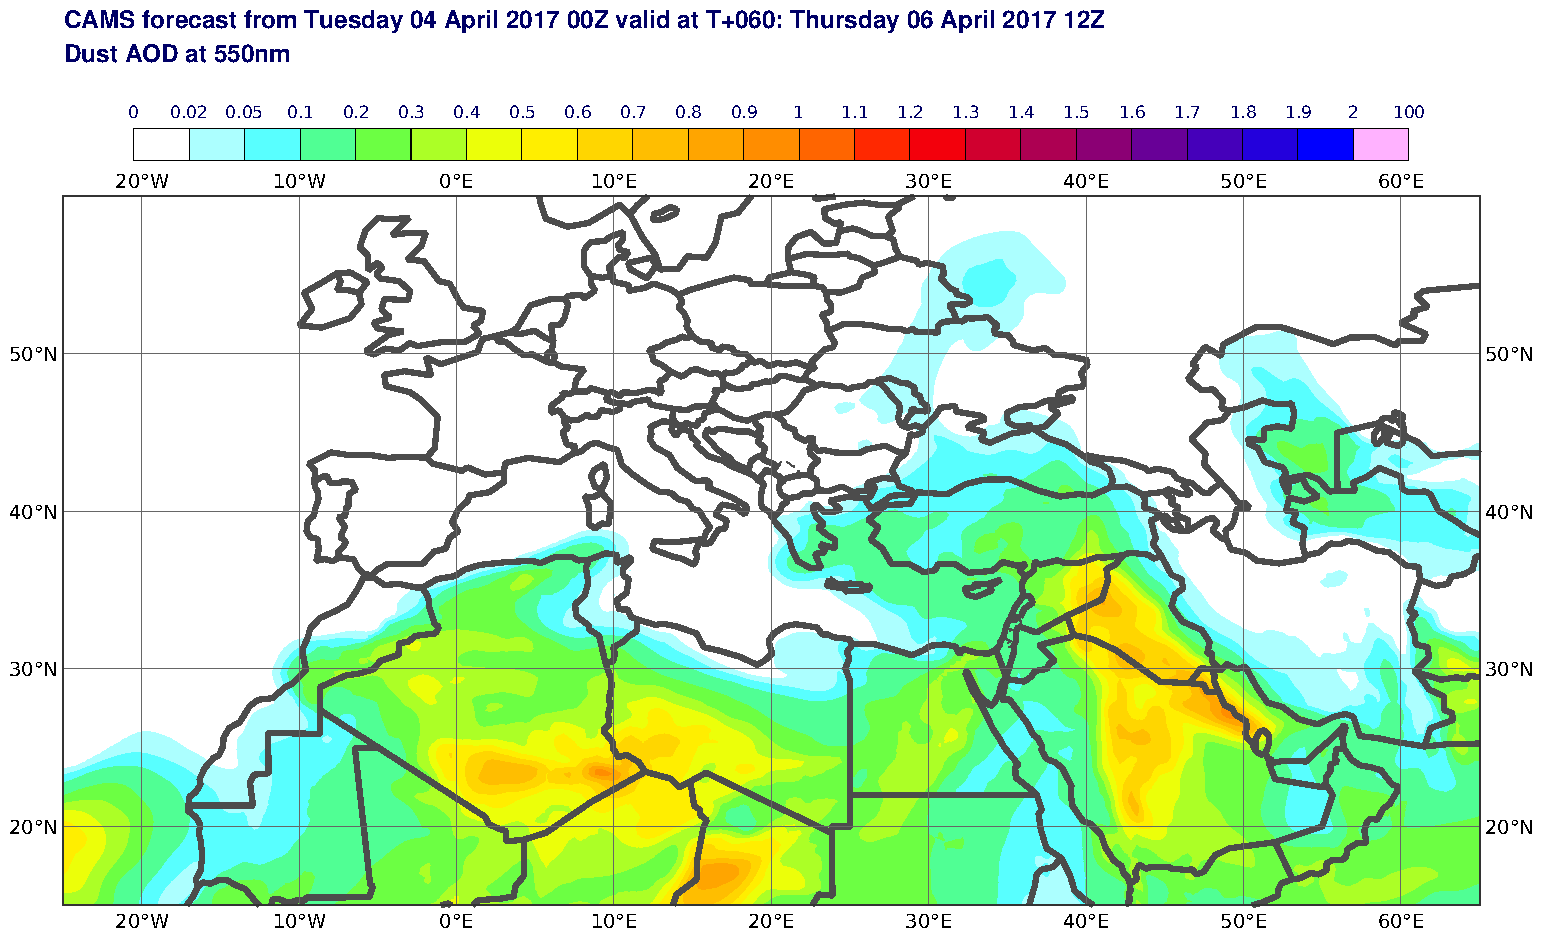 Dust AOD at 550nm valid at T60 - 2017-04-06 12:00